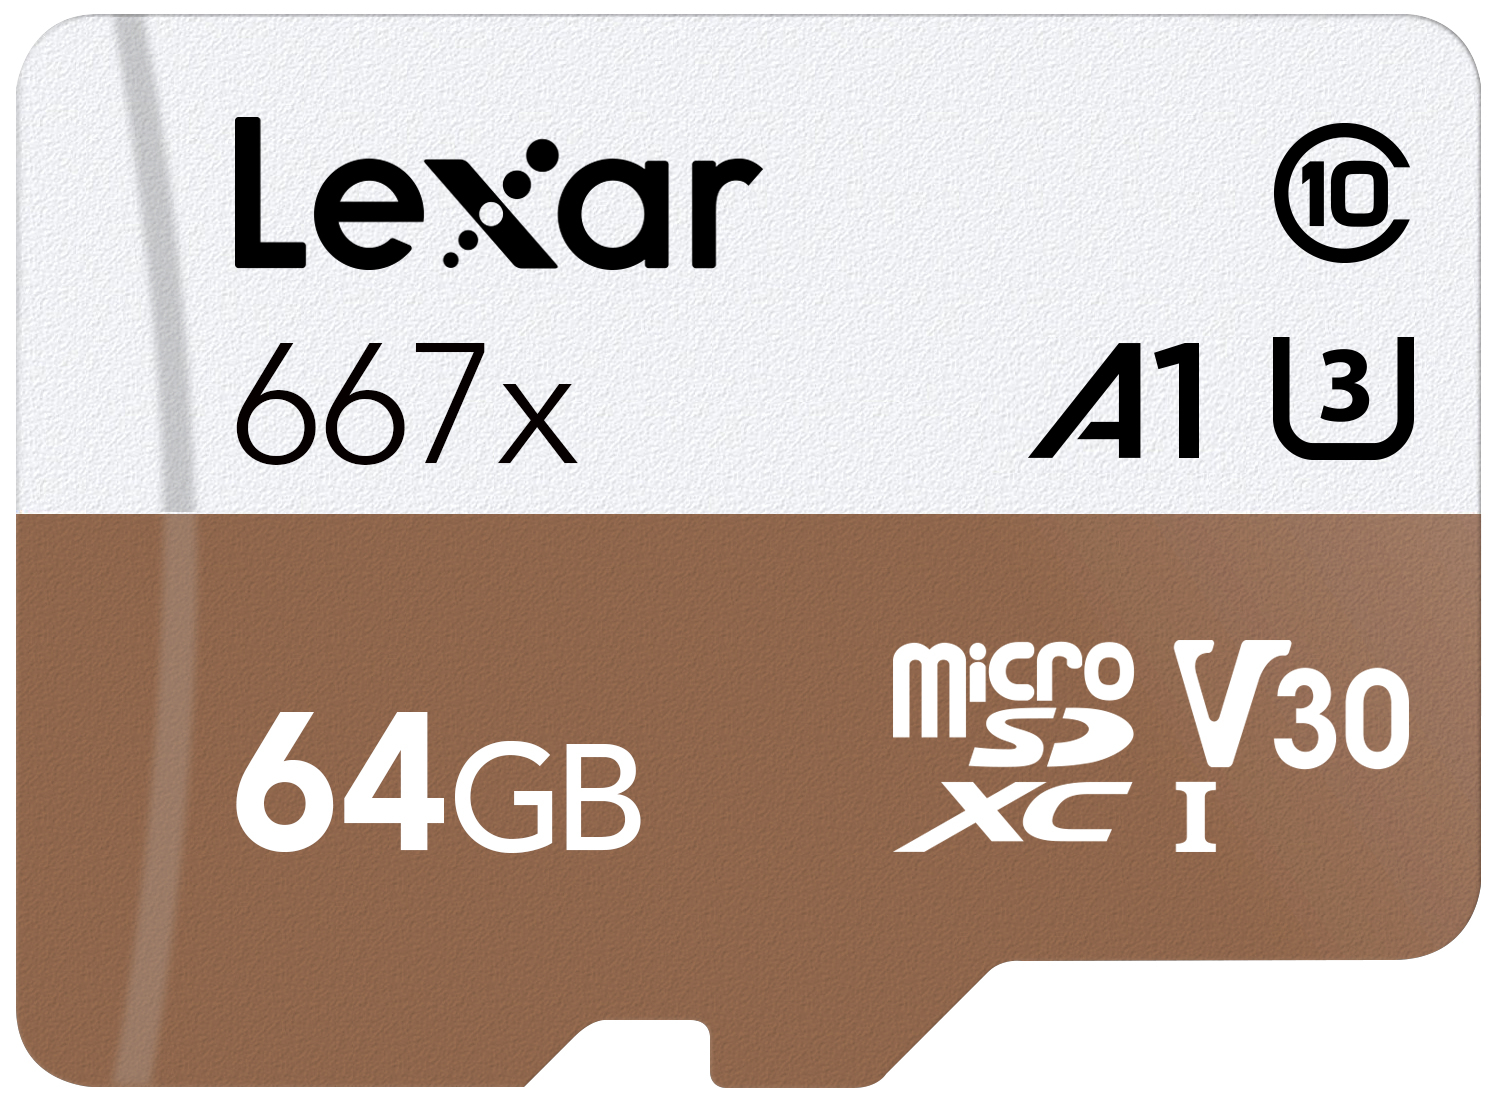 Lexar Professional 667x microSDXC UHS-I Card